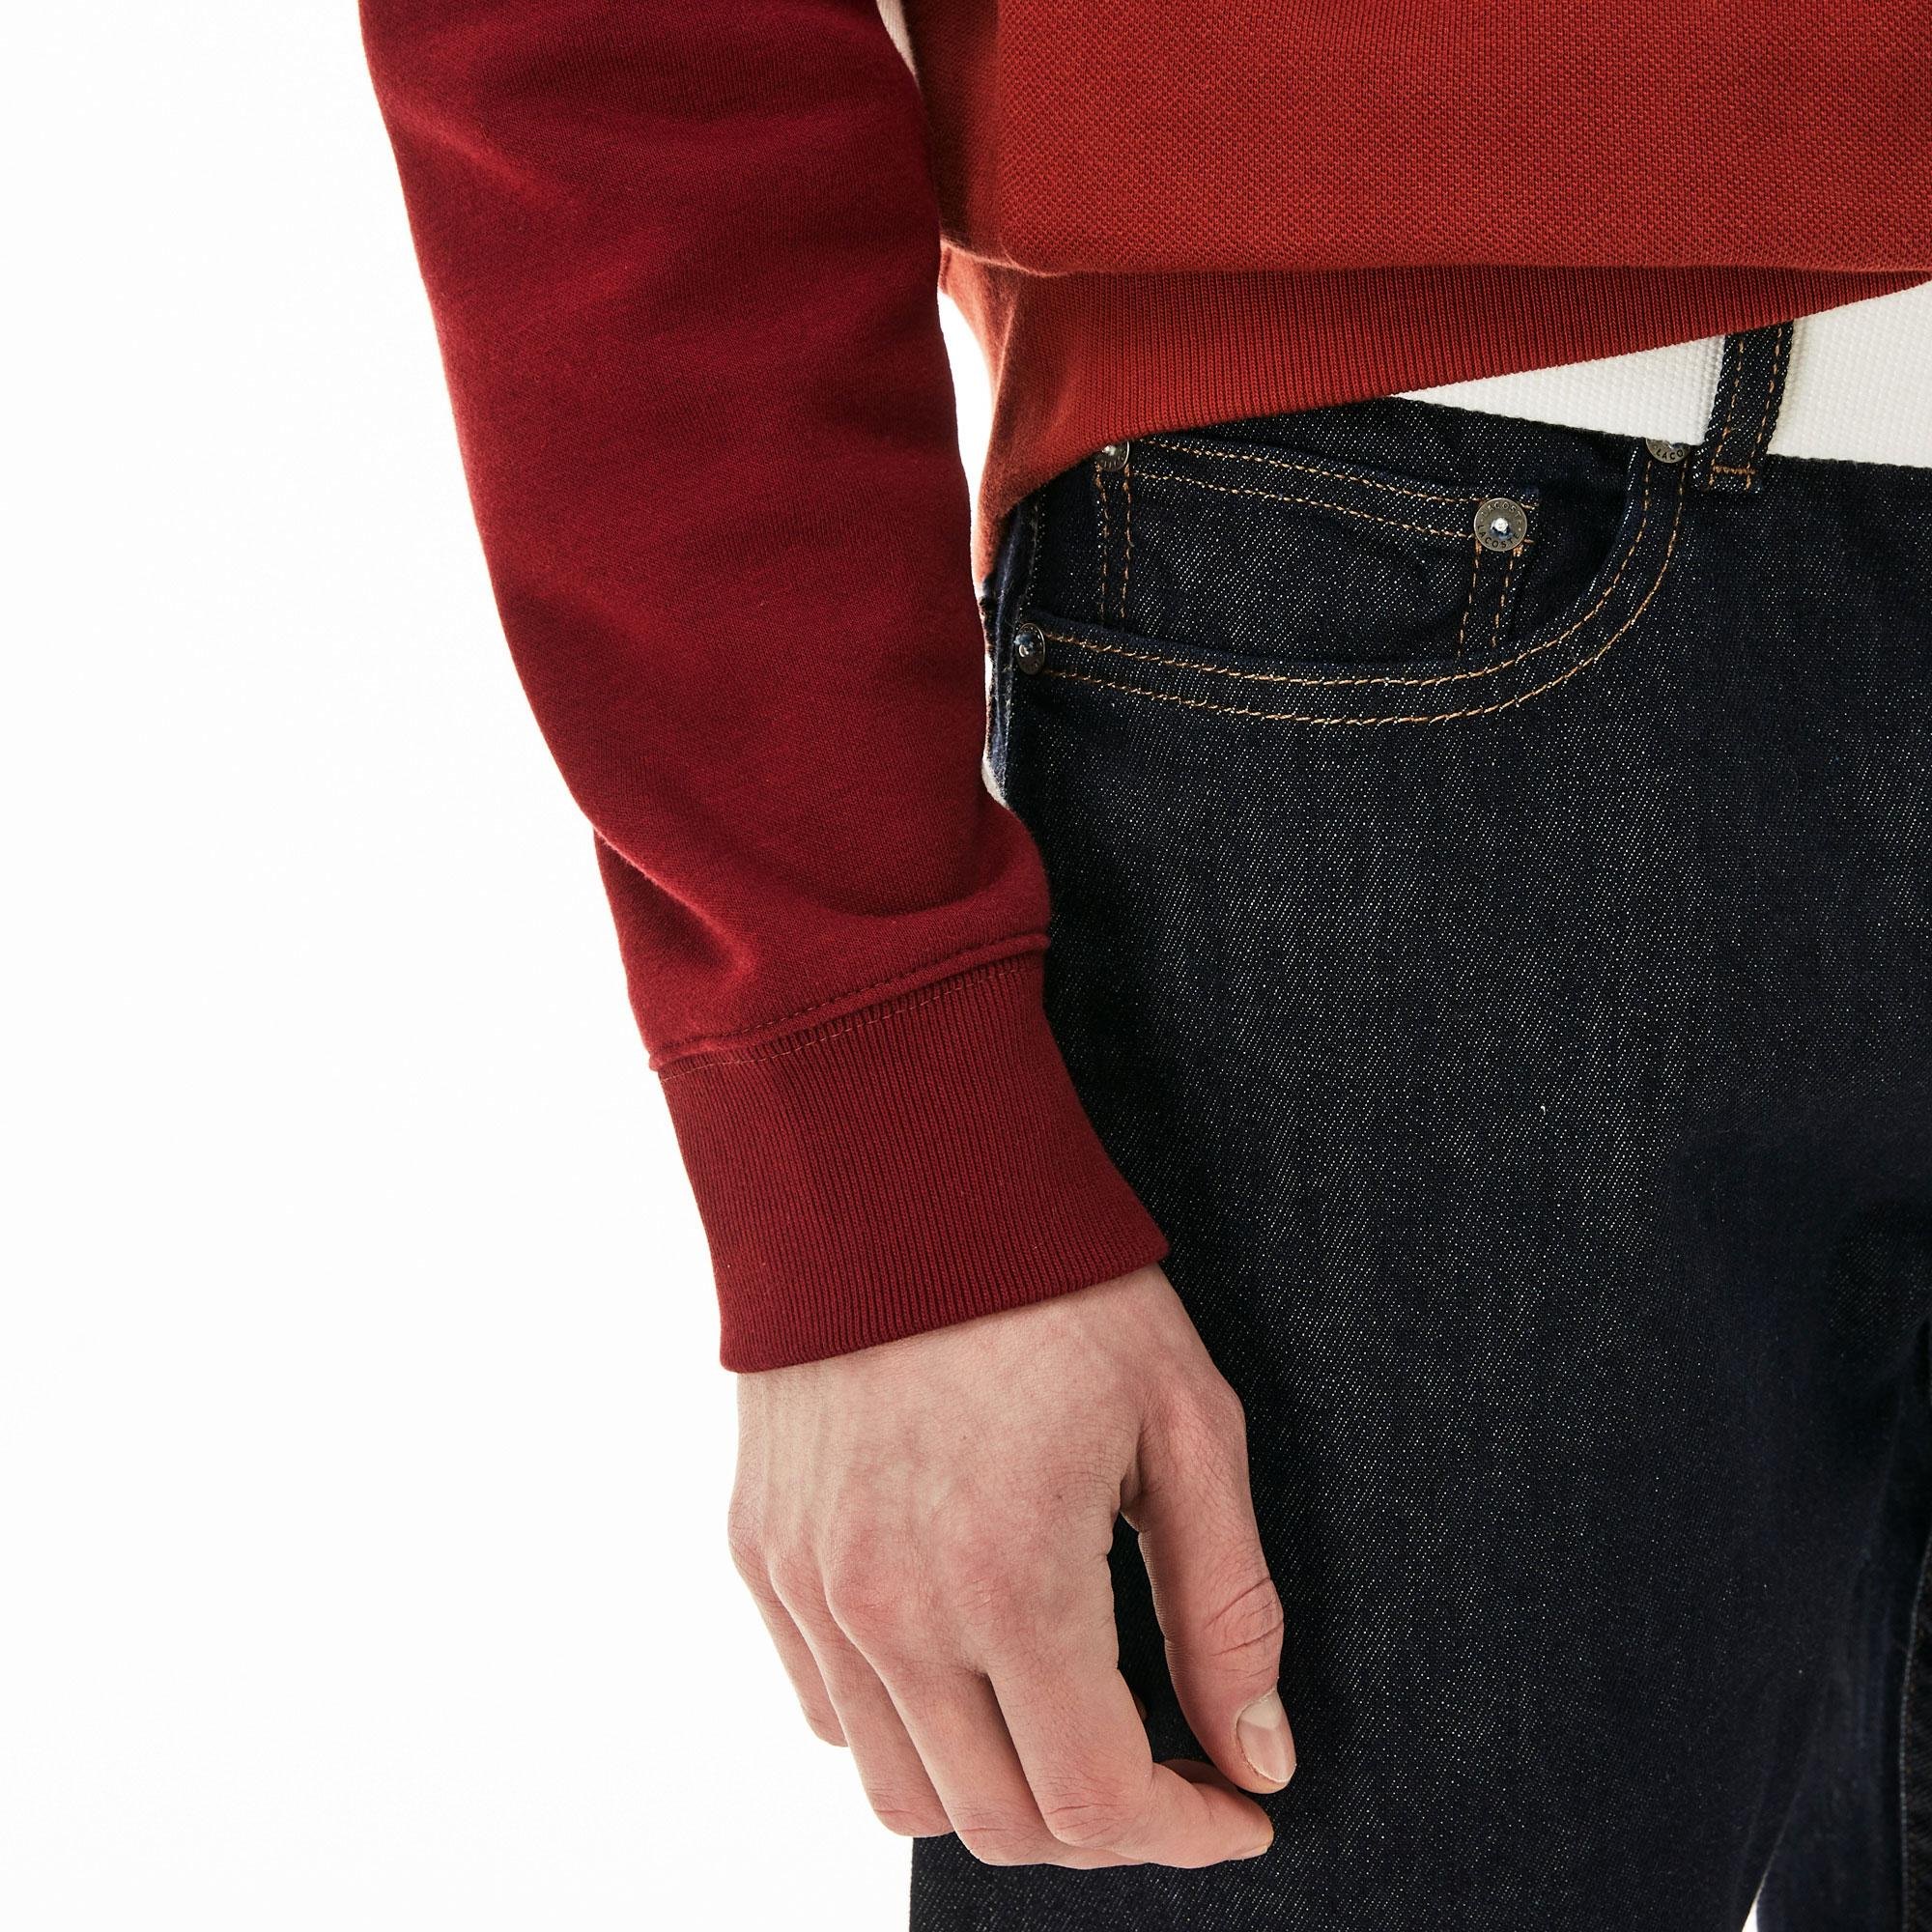 Lacoste Men's Slim Fit Stretch Denim 5-Pocket Jeans